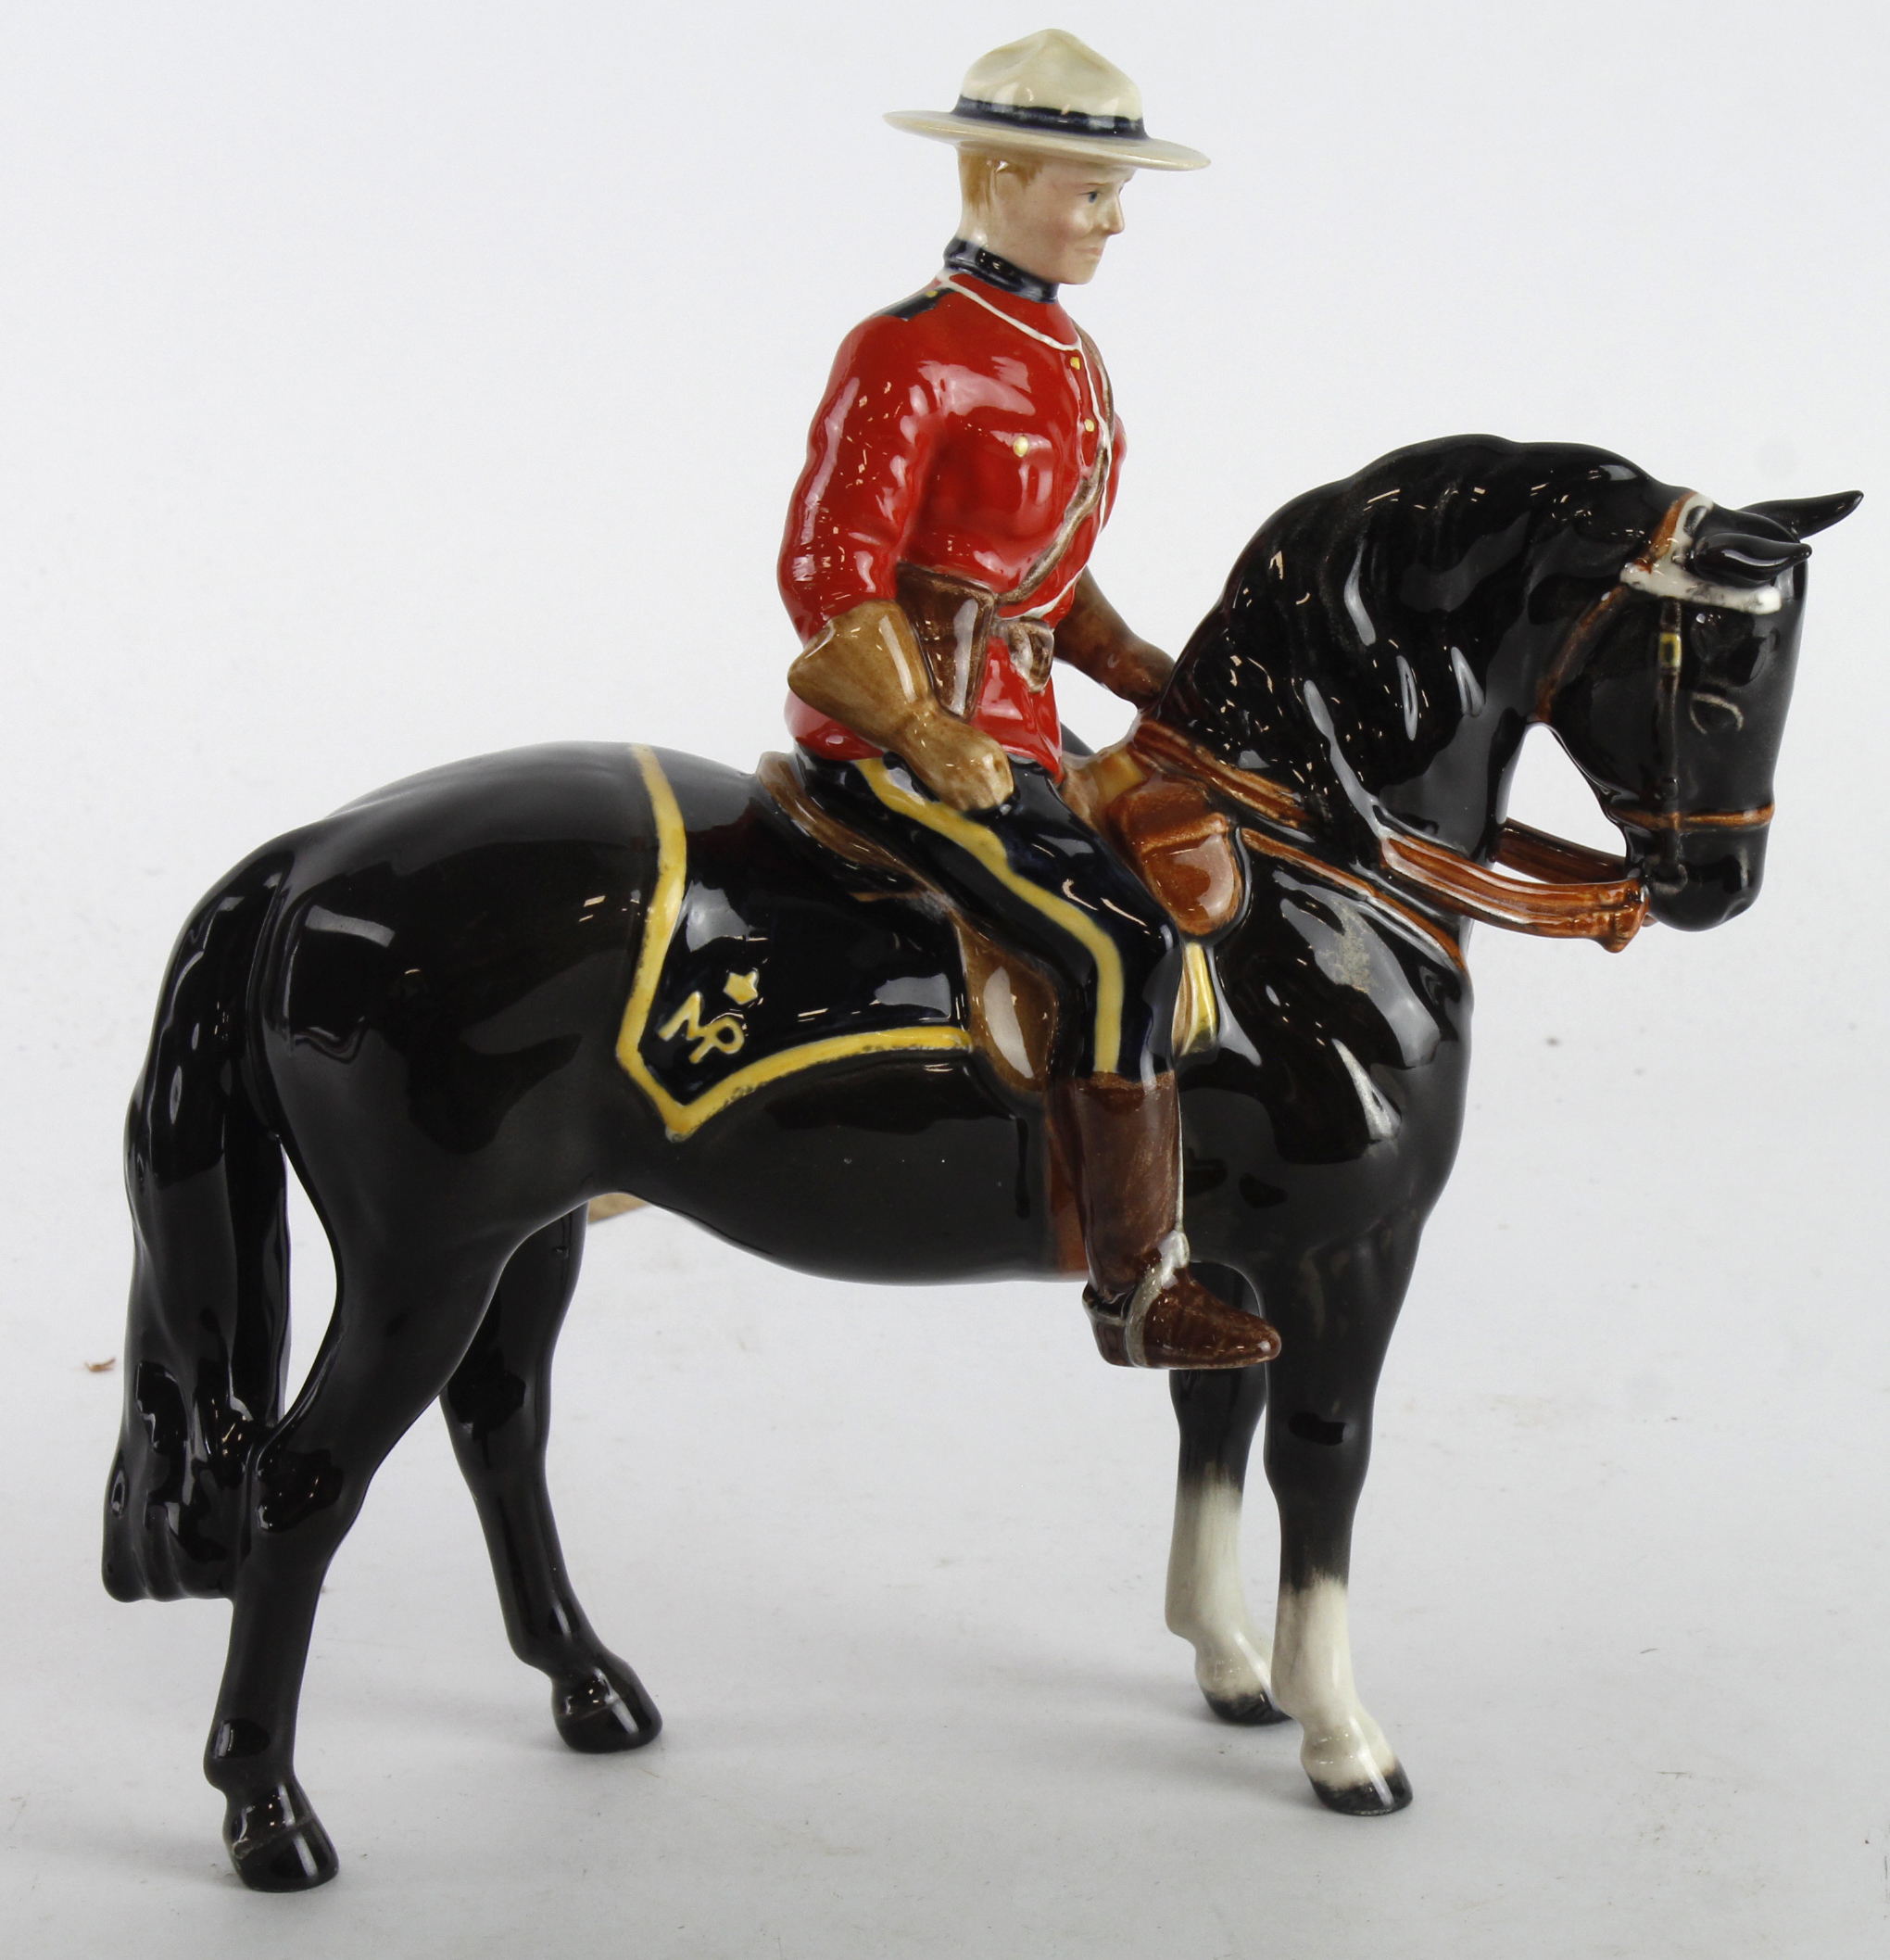 Beswick figure 'Canadian Mountie Policeman on Horseback' (1375), height 21cm approx.